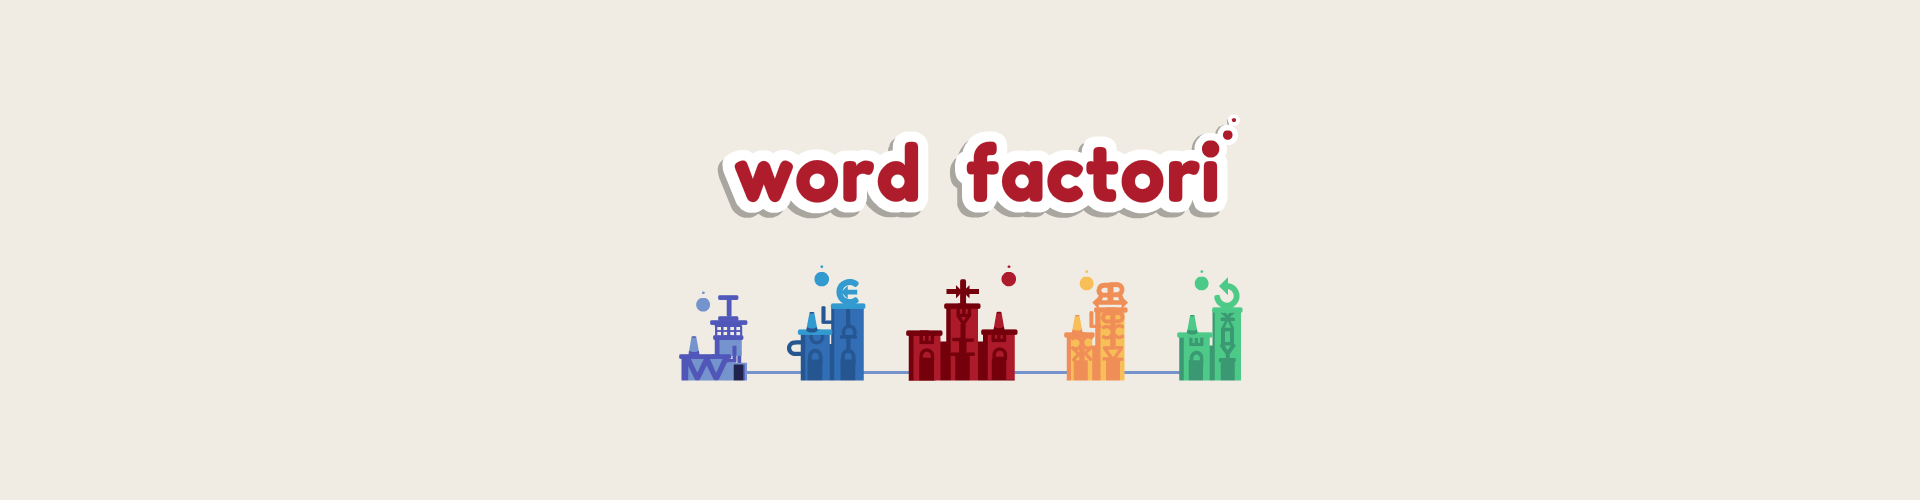 word-factori-web-header